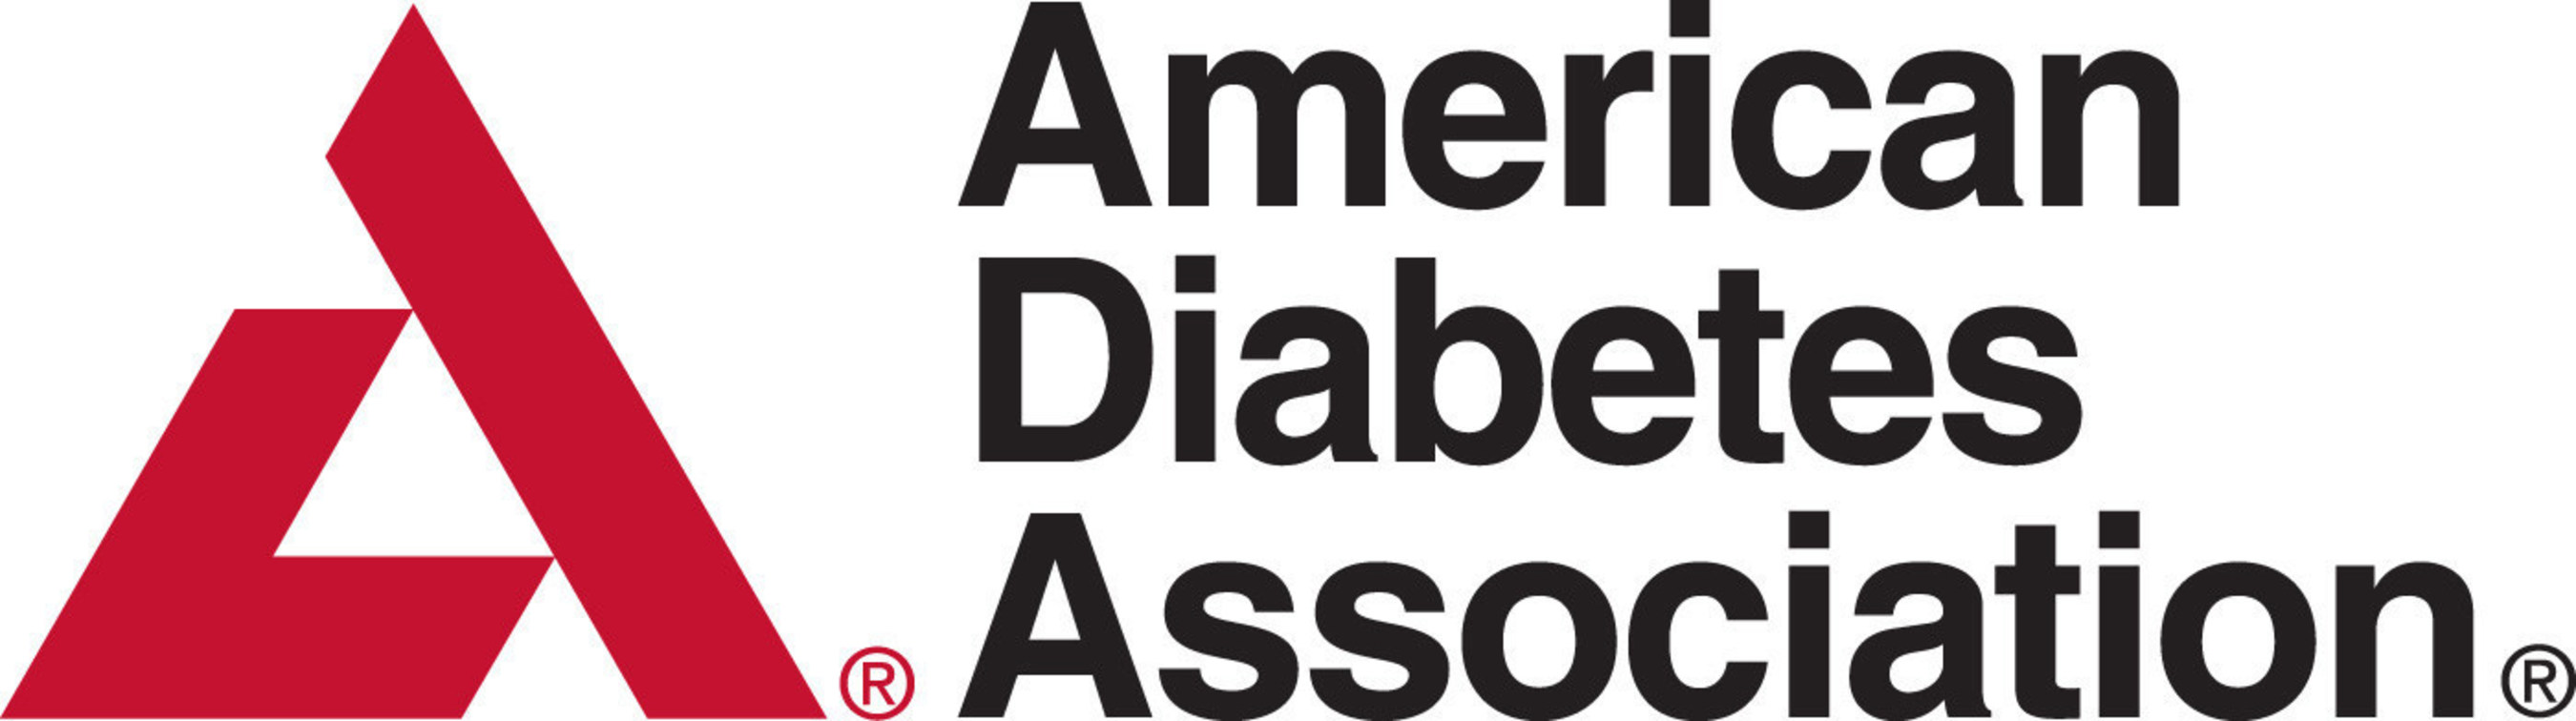 American Diabetes Association Logo.